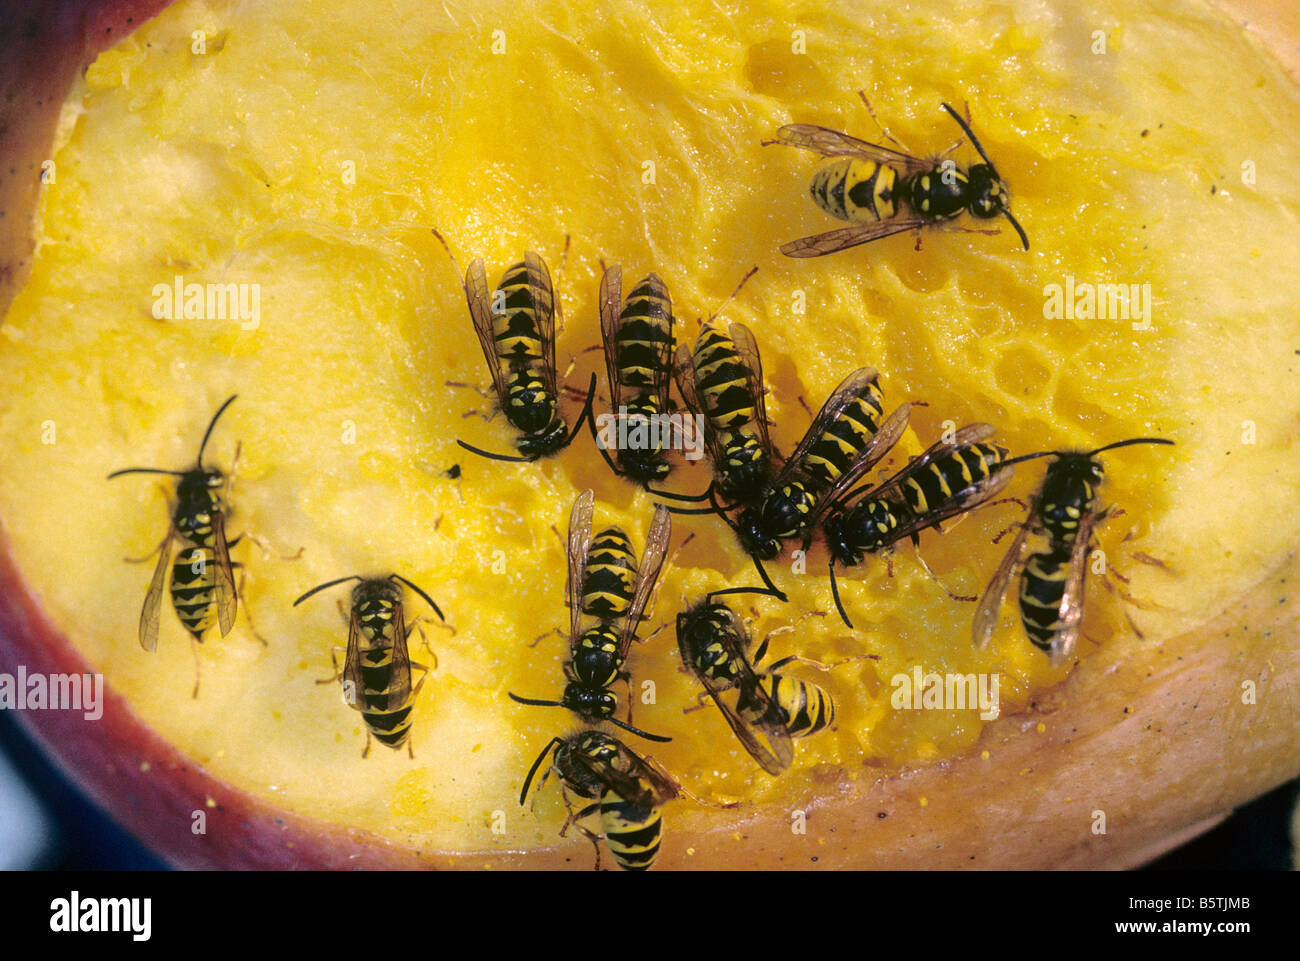 Common wasps Vespula vulgaris feeding on mango Stock Photo